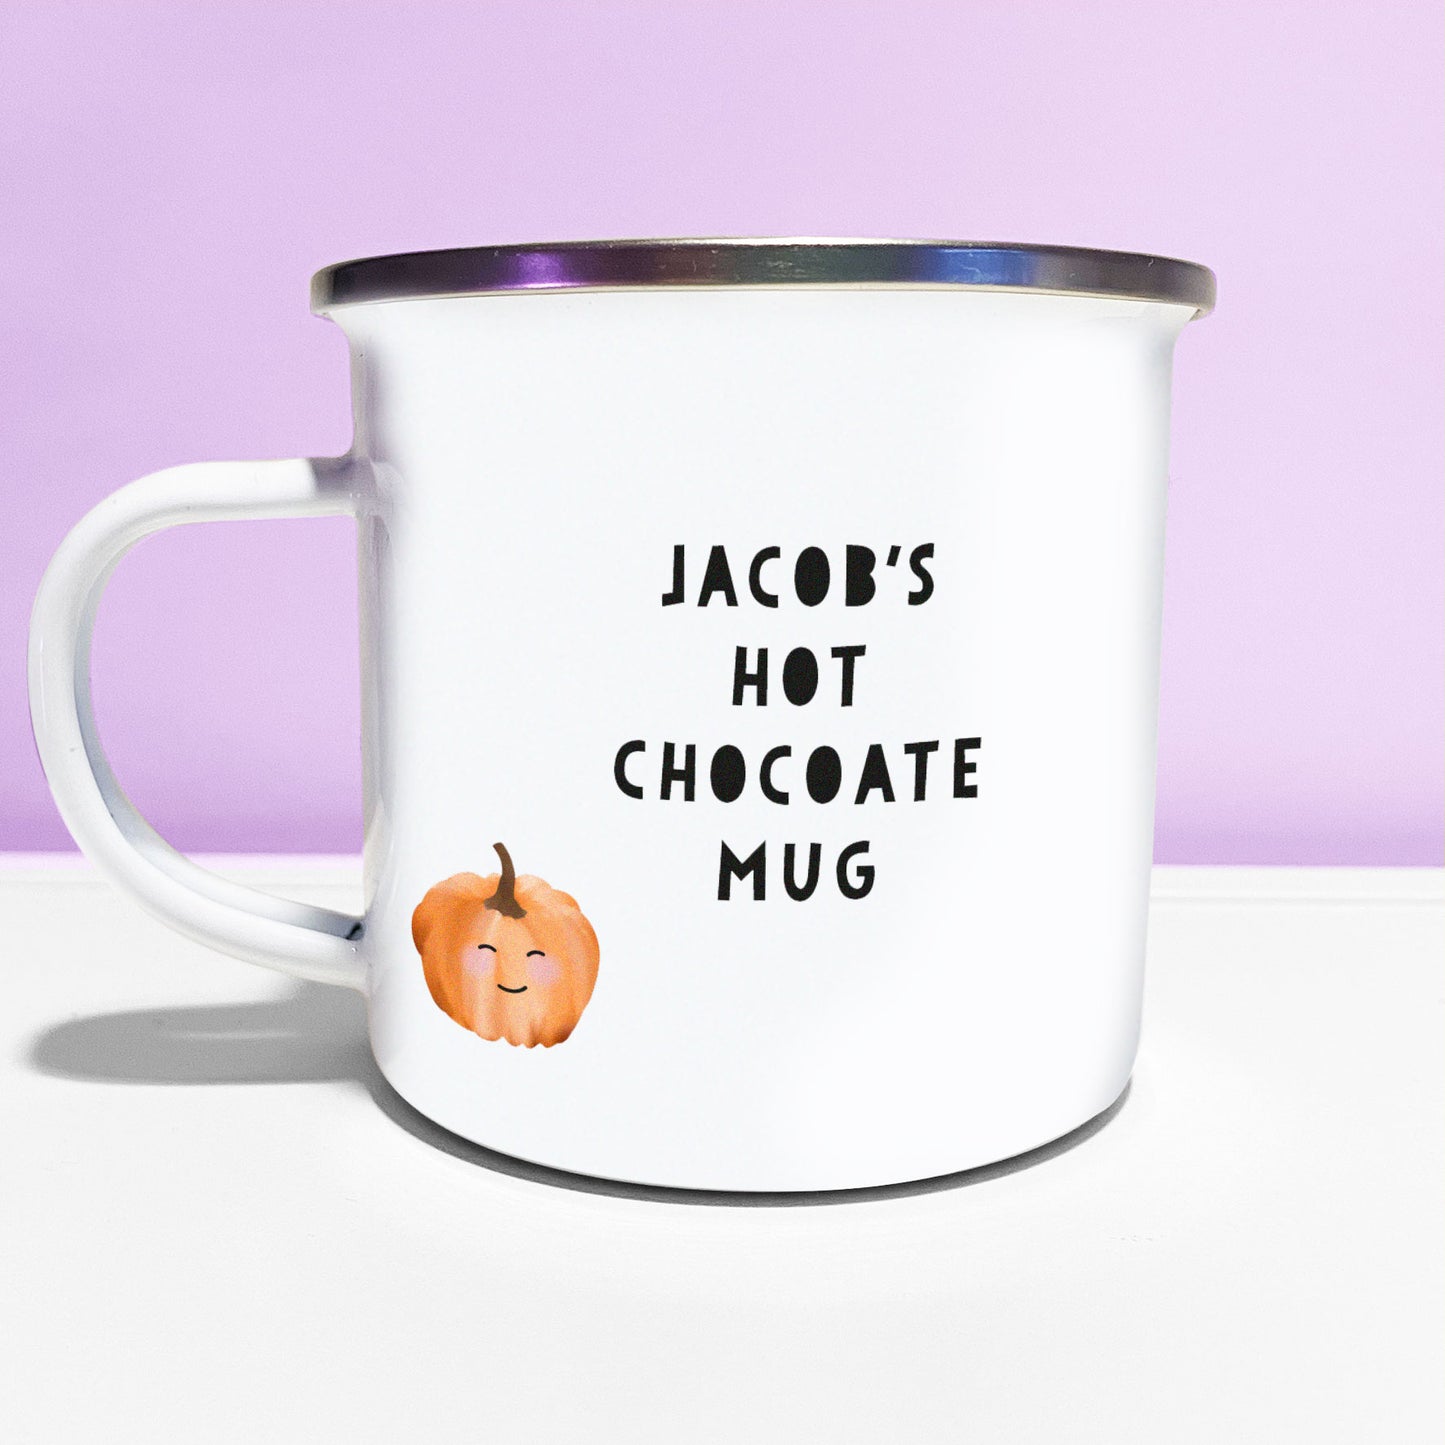 Hello Pumpkin Enamel Mug. Personalised Camping cup. Cute Halloween Mug. Autumnal mug.